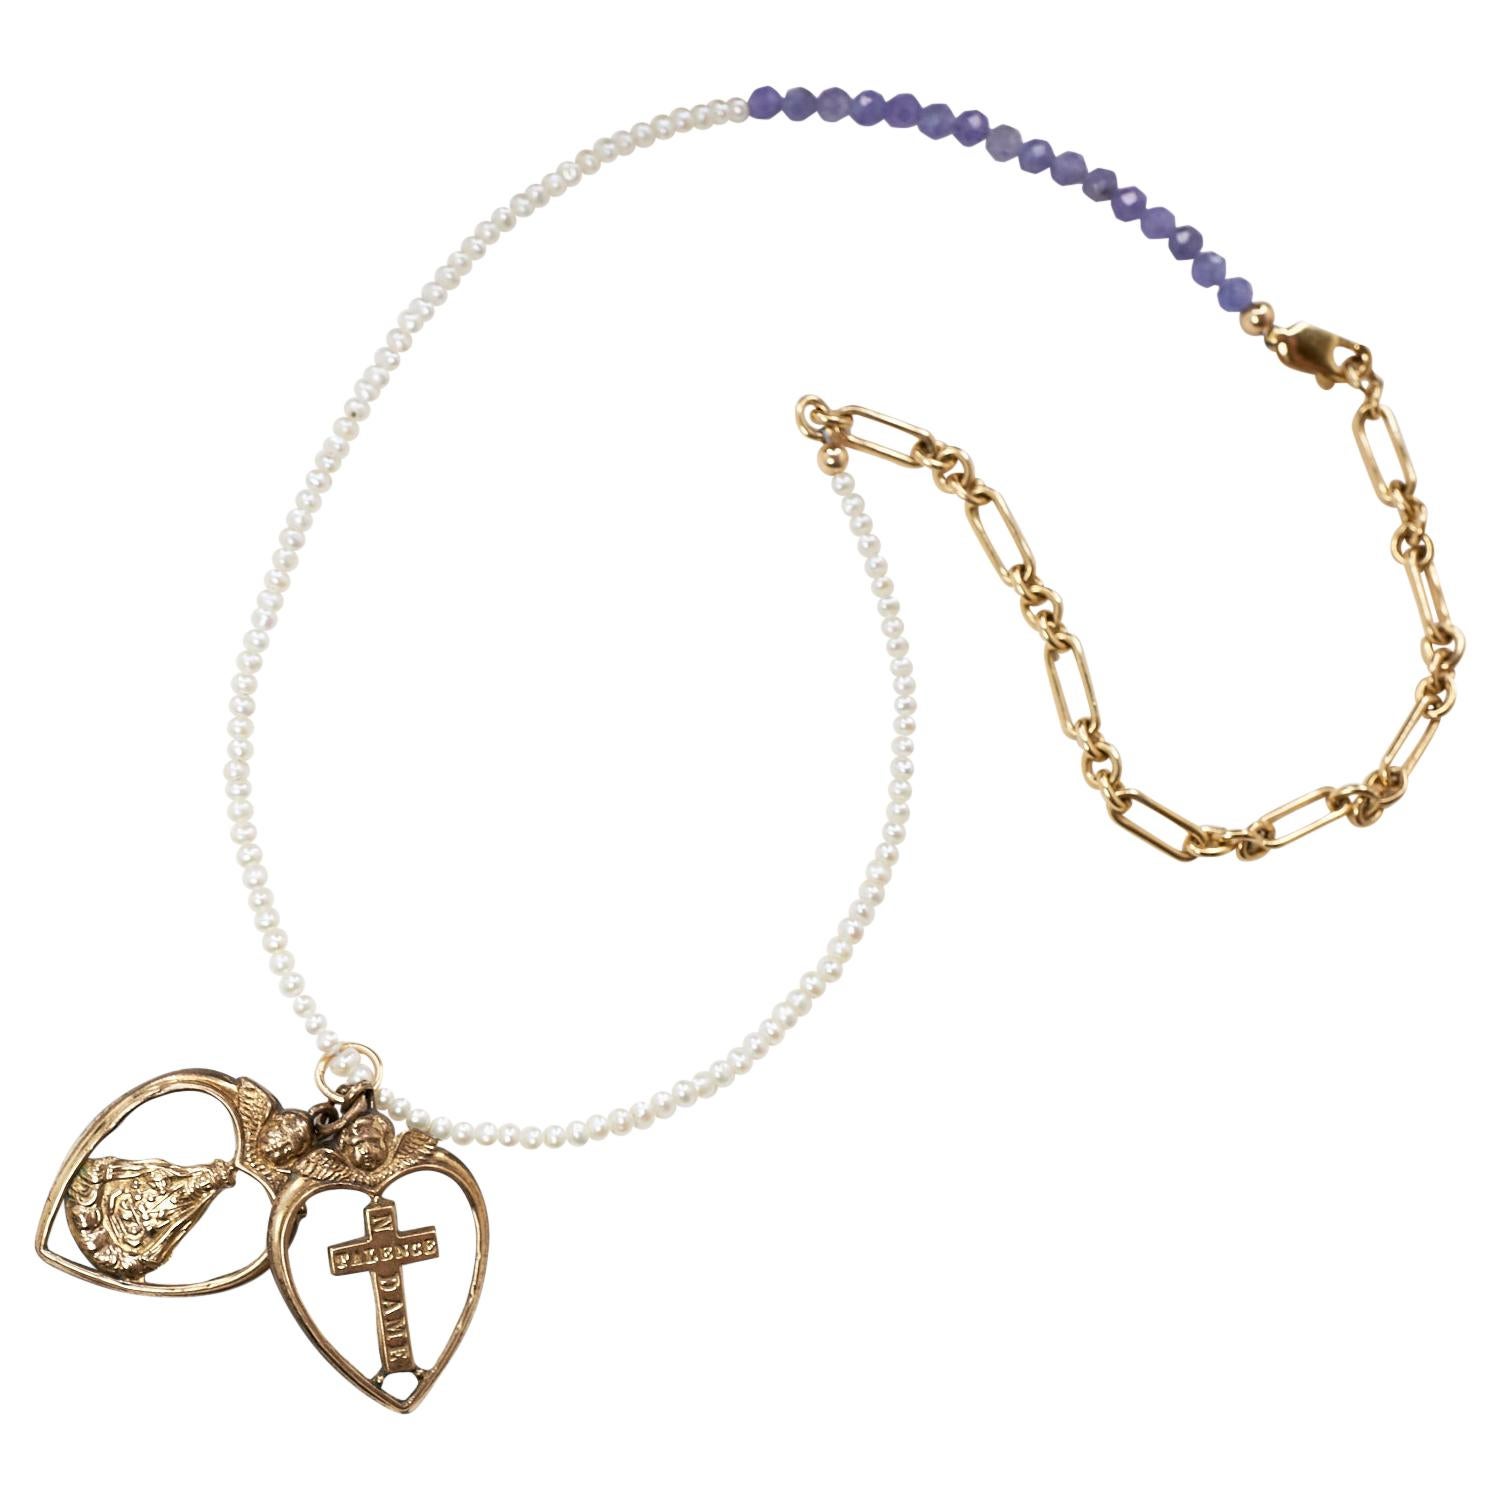 Heart Angel Cross Pendant White Pearl Tanzanite Necklace Choker J Dauphin
Lenght: 16